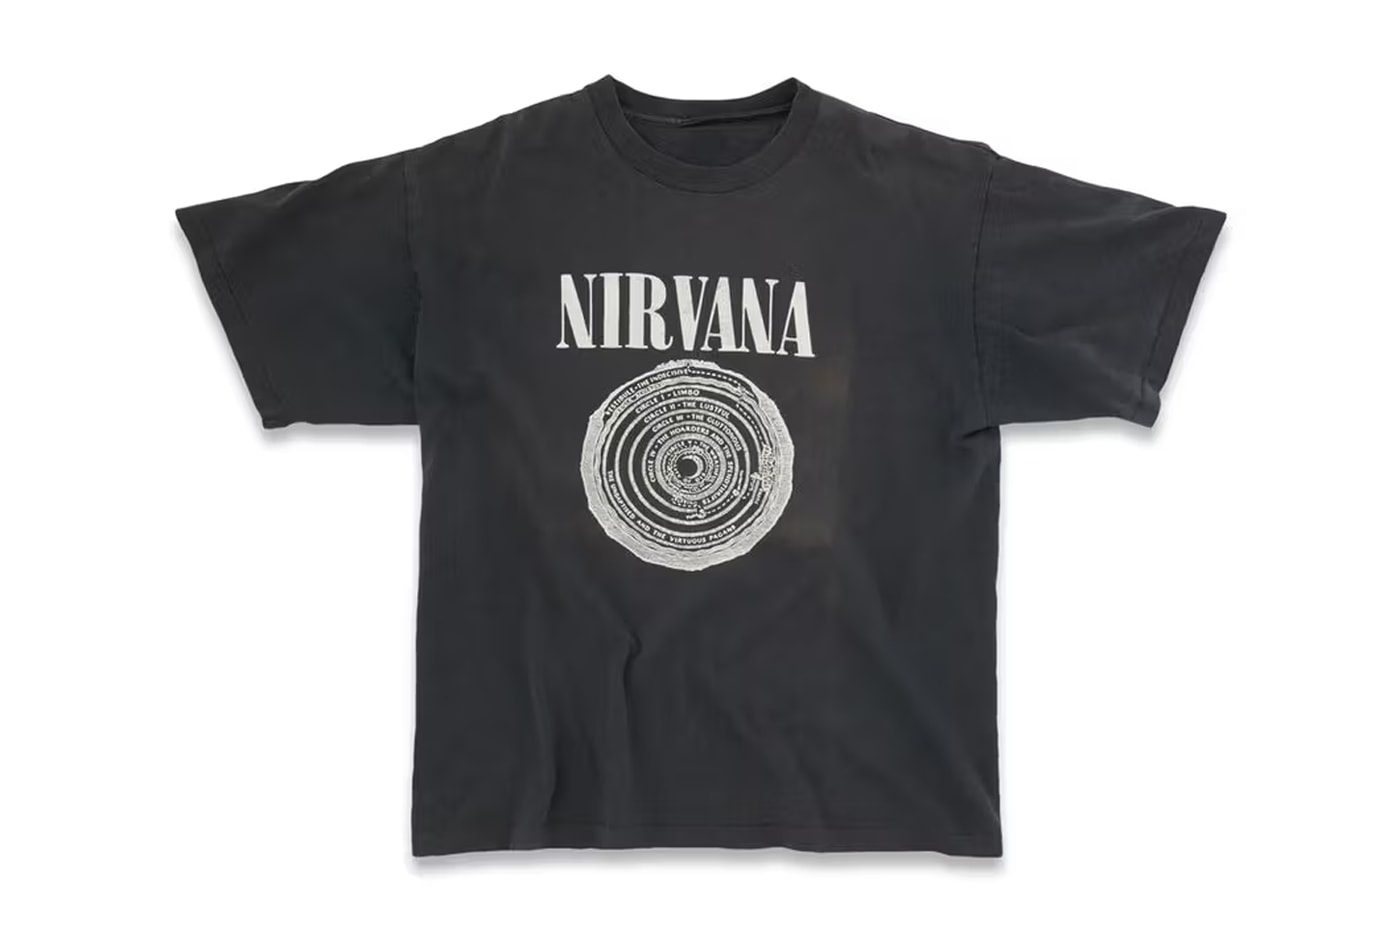 Saint Laurent Rive Droite "The Vintage" Capsule Collection T-Shirts Band Tees Anthony Vaccarello Nirvana The Cranberries Kurt Cobain 